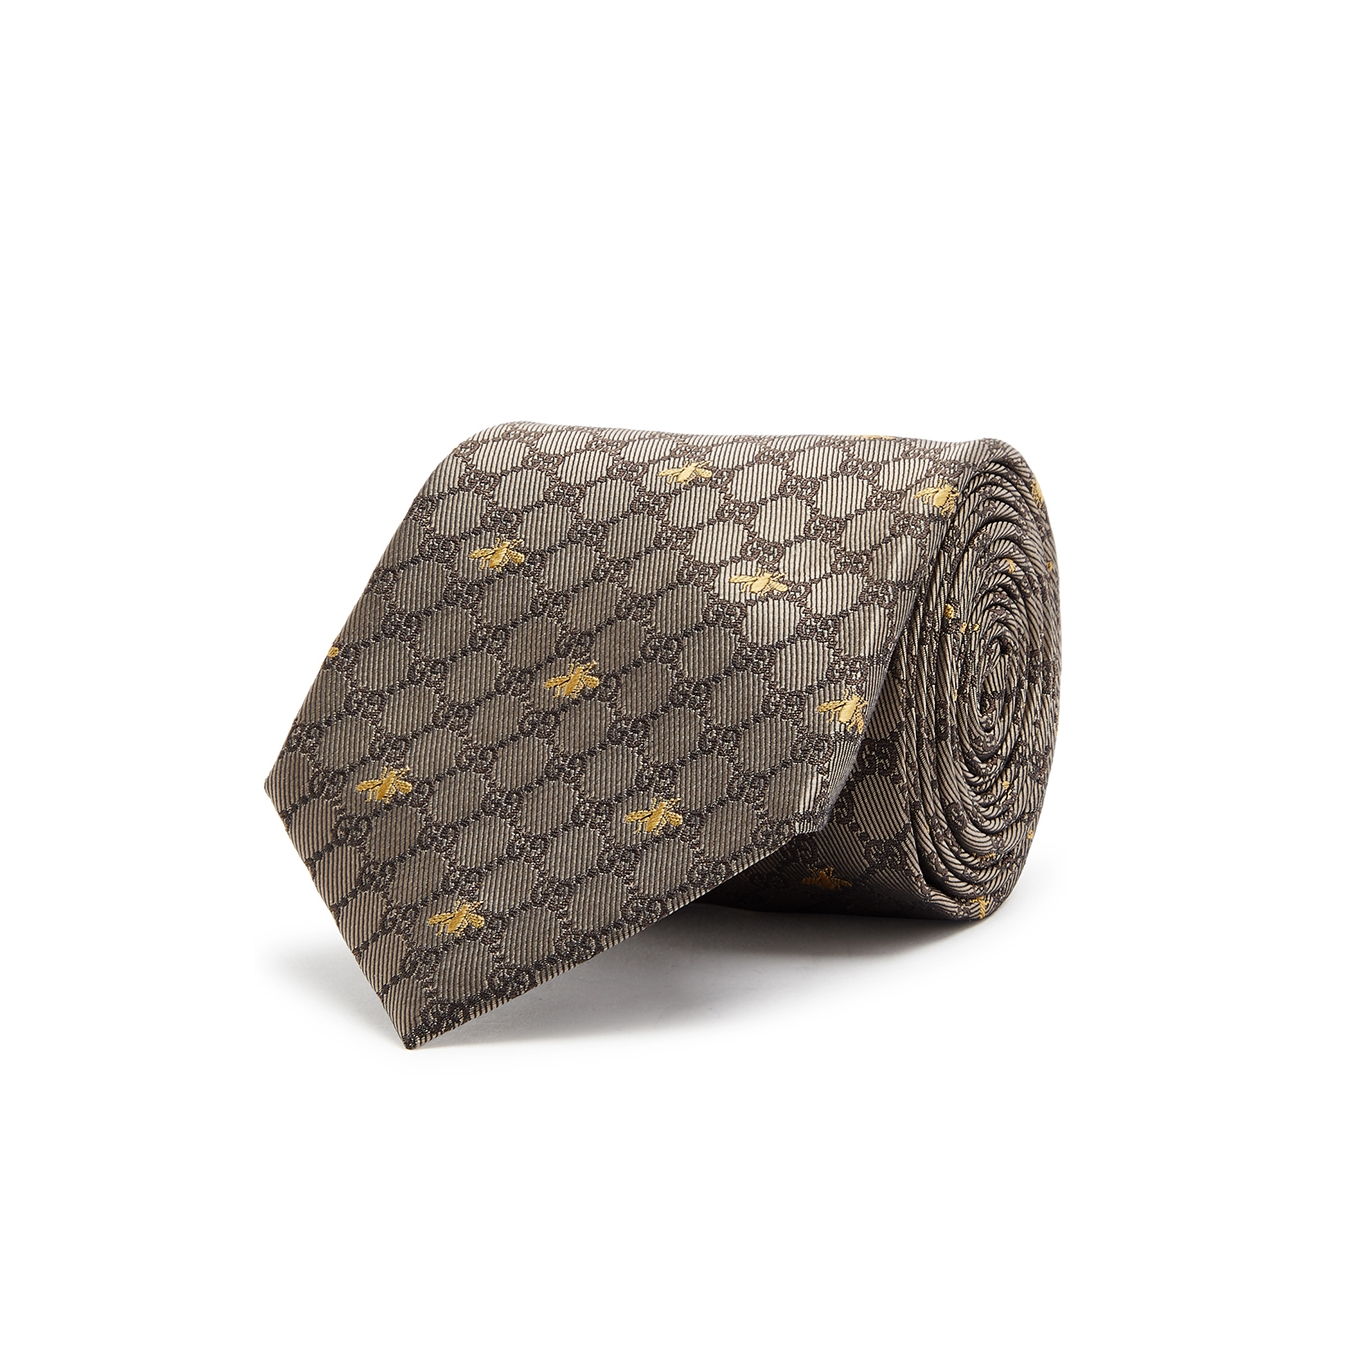 Gucci Beige Monogram and Bees Silk Jacquard Classic Tie Gucci